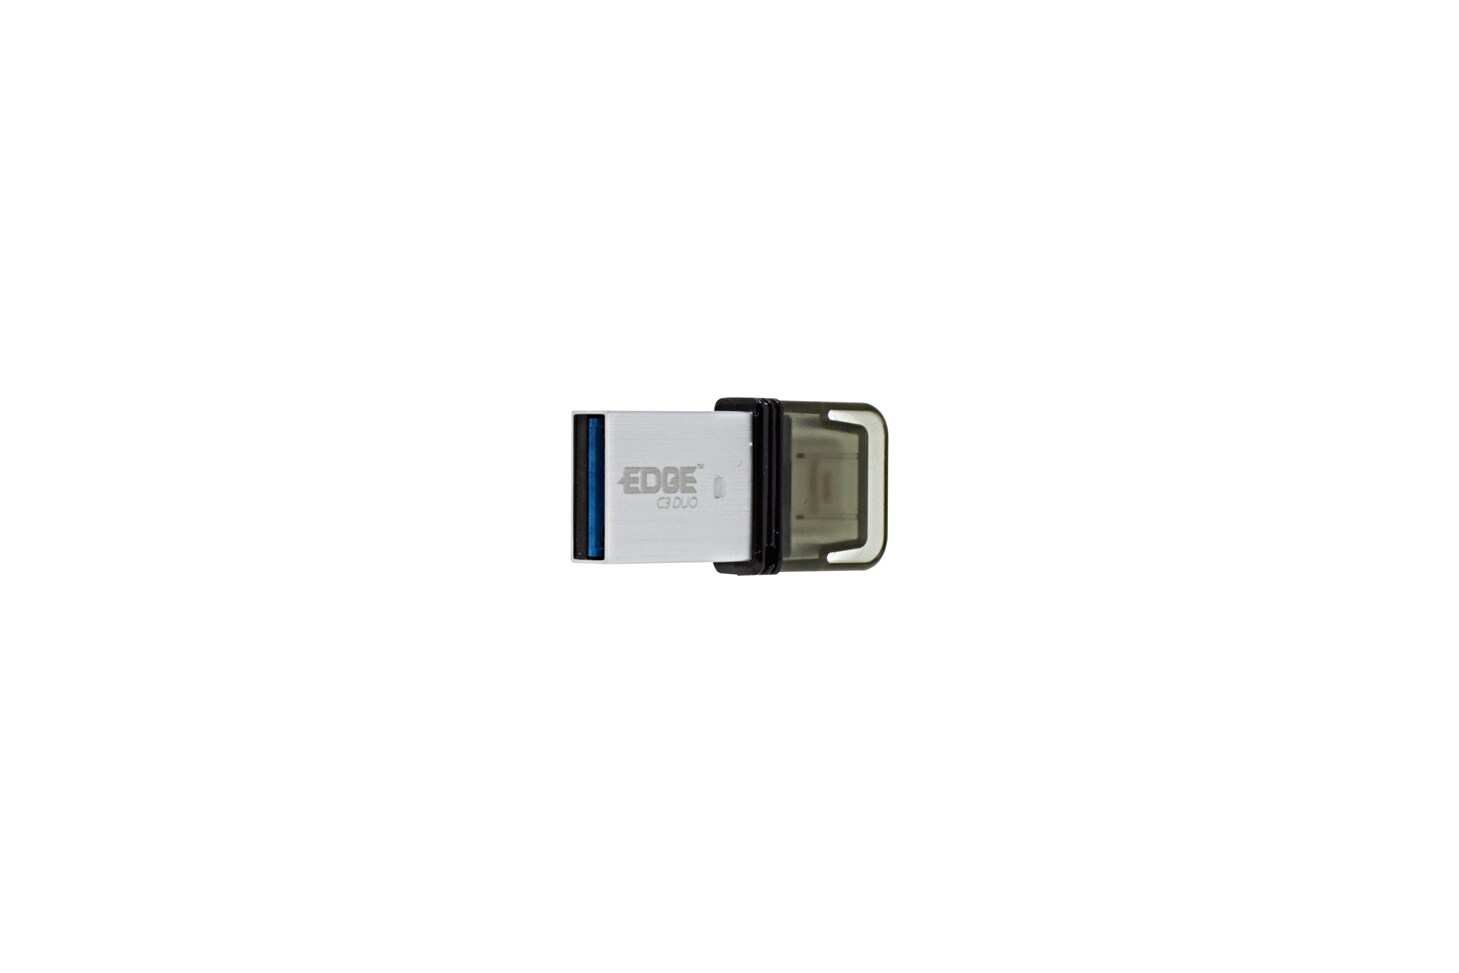 slange I udlandet Duplikere EDGE 64GB C3 Duo USB 3.1 Gen 1 Type-C Flash Drive - PE253660 - -